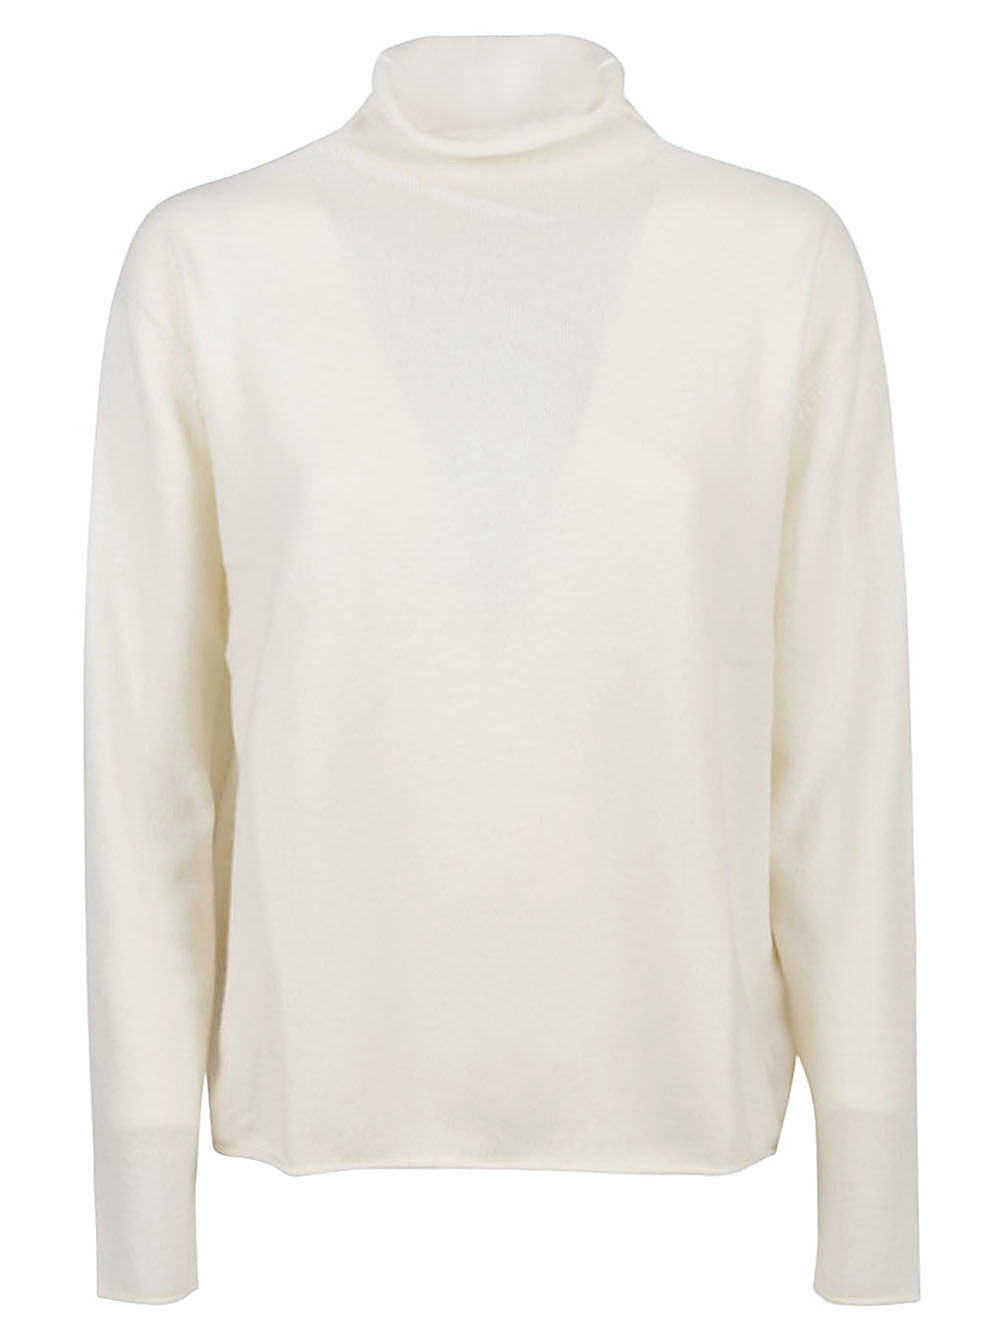 LISA YANG - The Clio Cashmere Sweater Lisa Yang